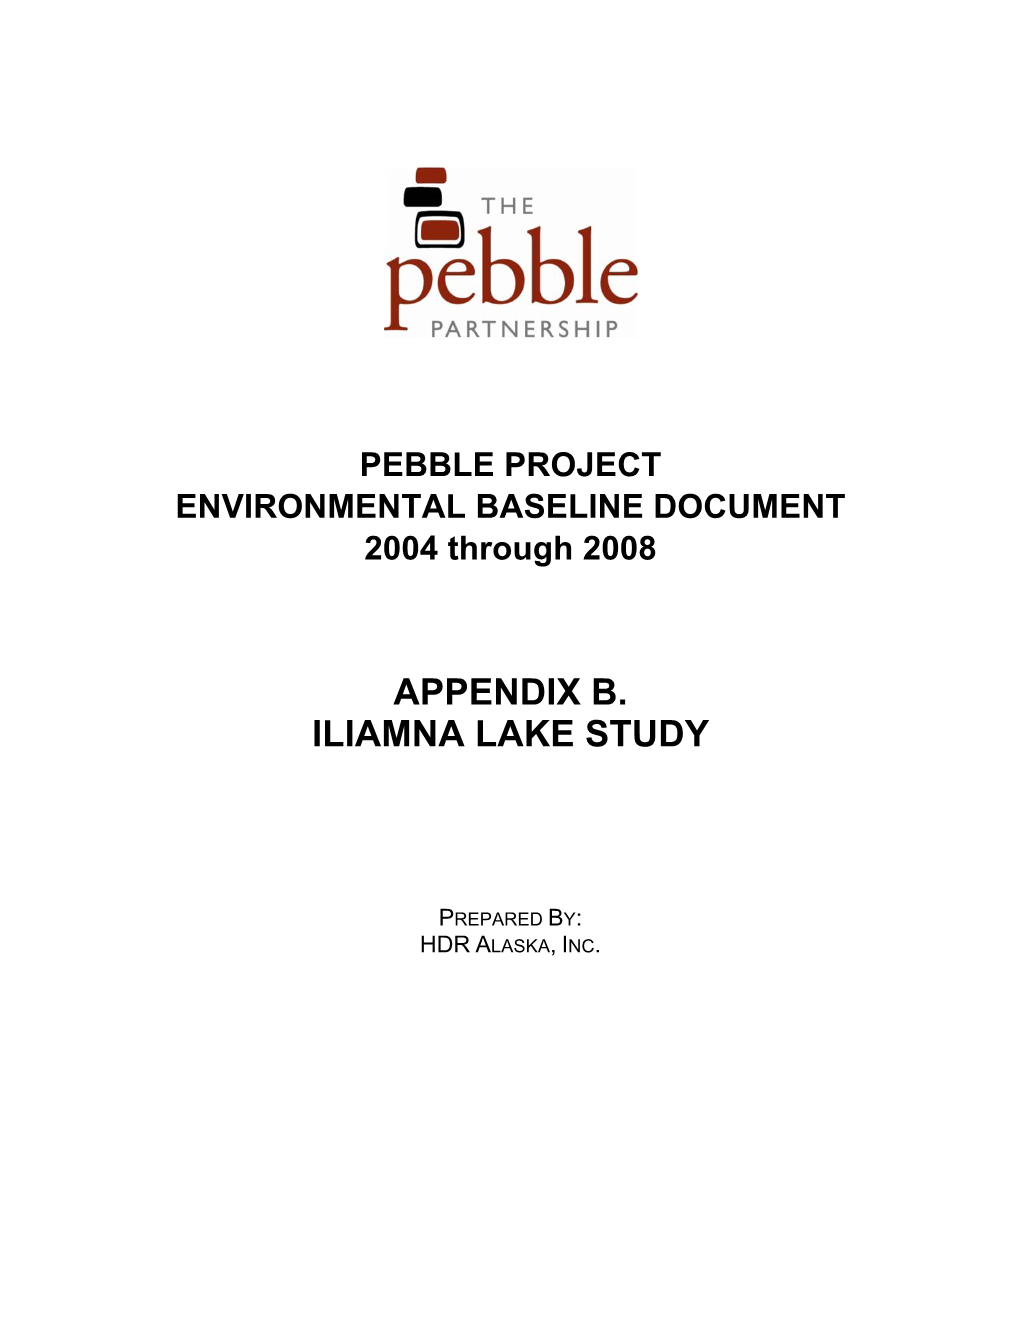 Appendix B. Iliamna Lake Study